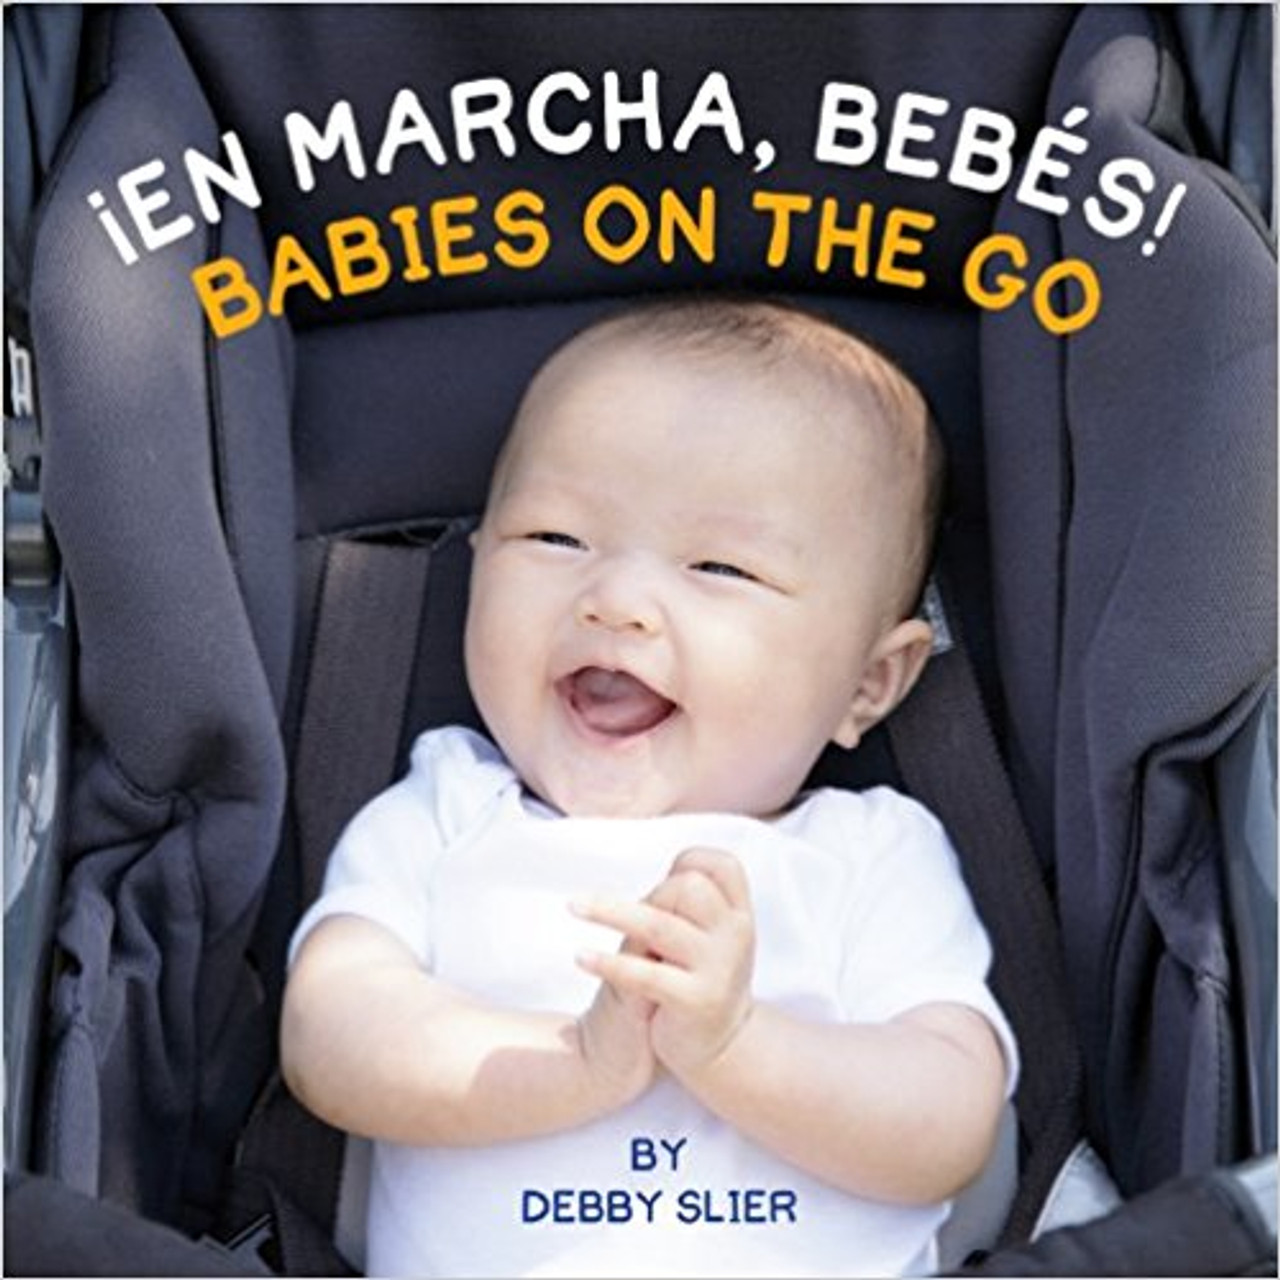 En Marcha, Bebe!/Babies on the Go! by Beddy Slier 